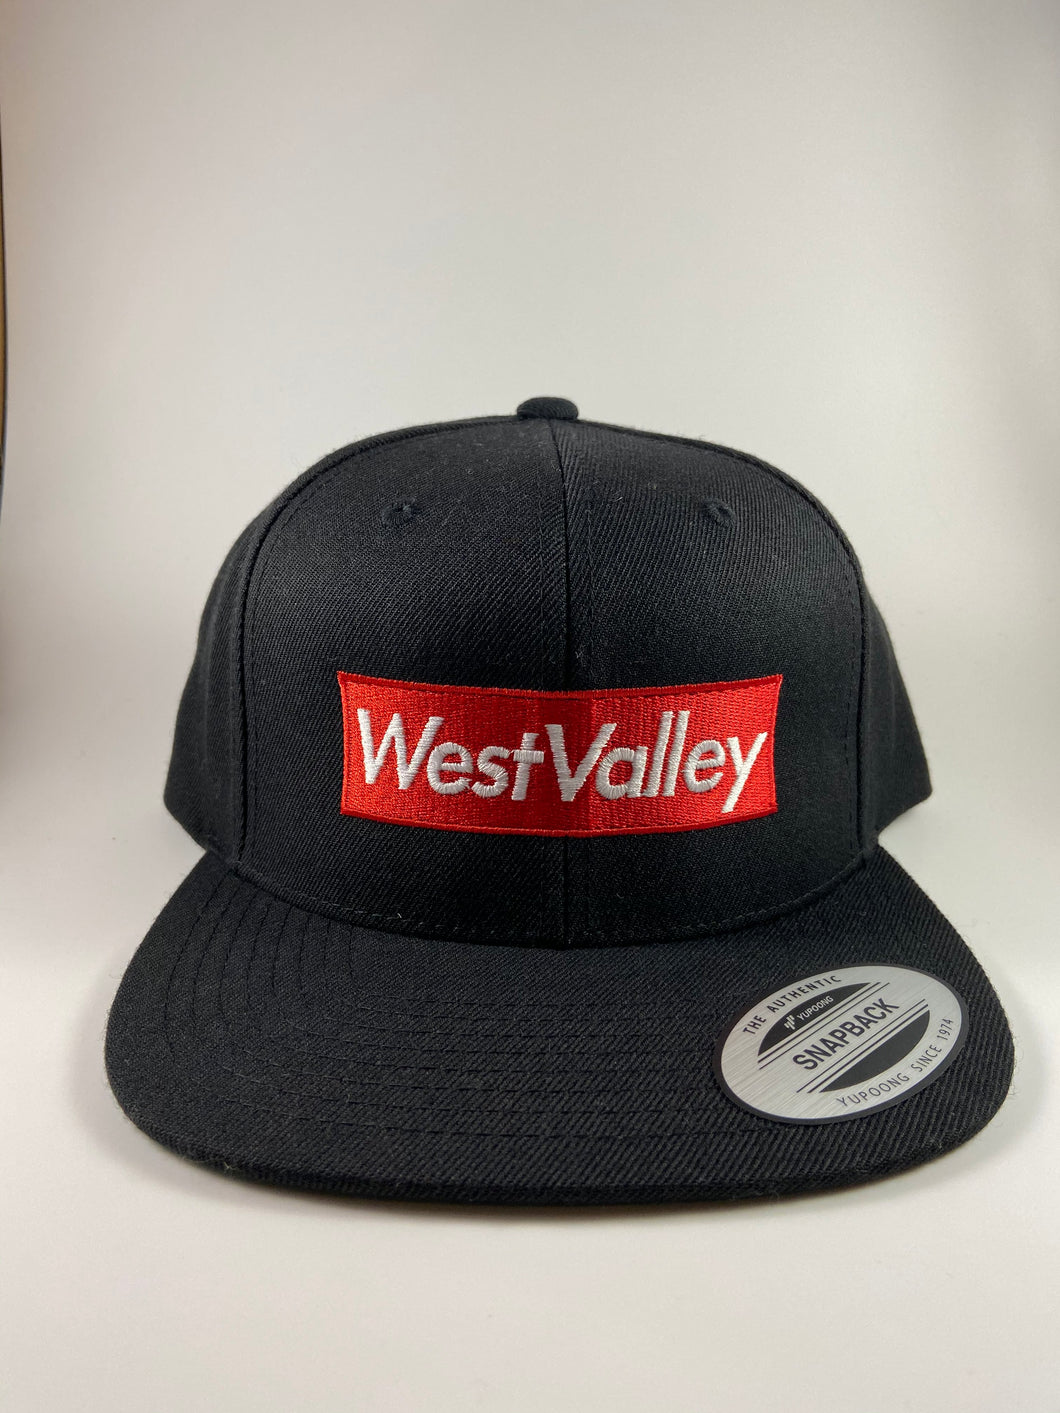 West Valley Box Logo Stitched Hat